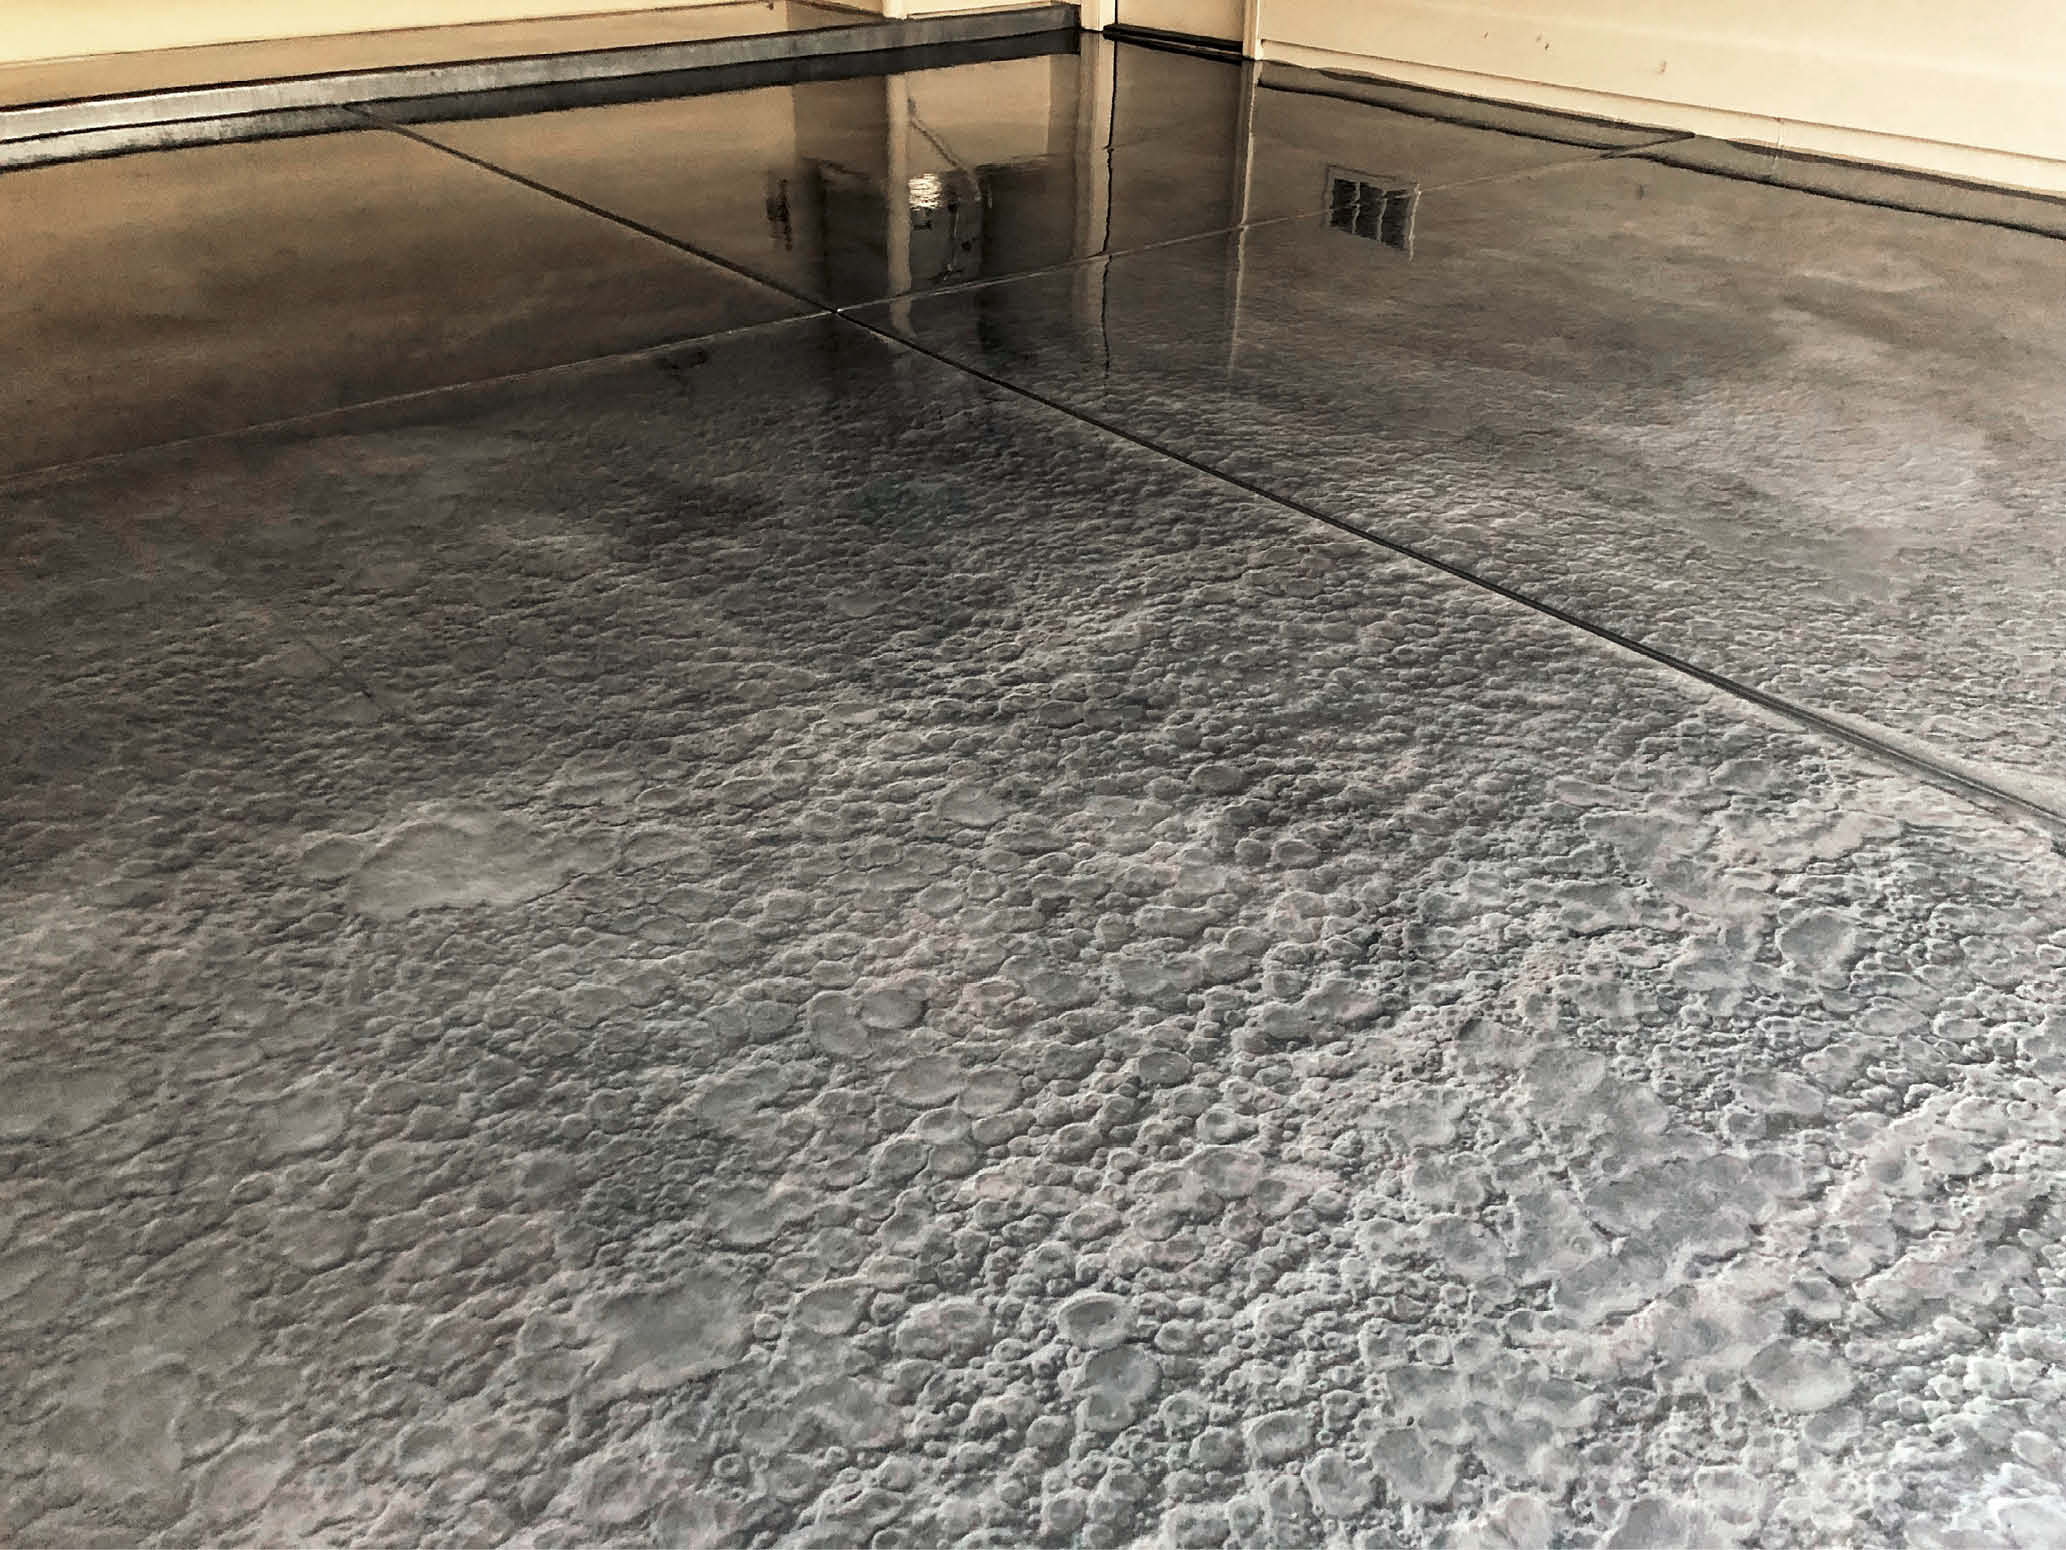 Dark floor with metallic epoxy affect to make it look like floating.